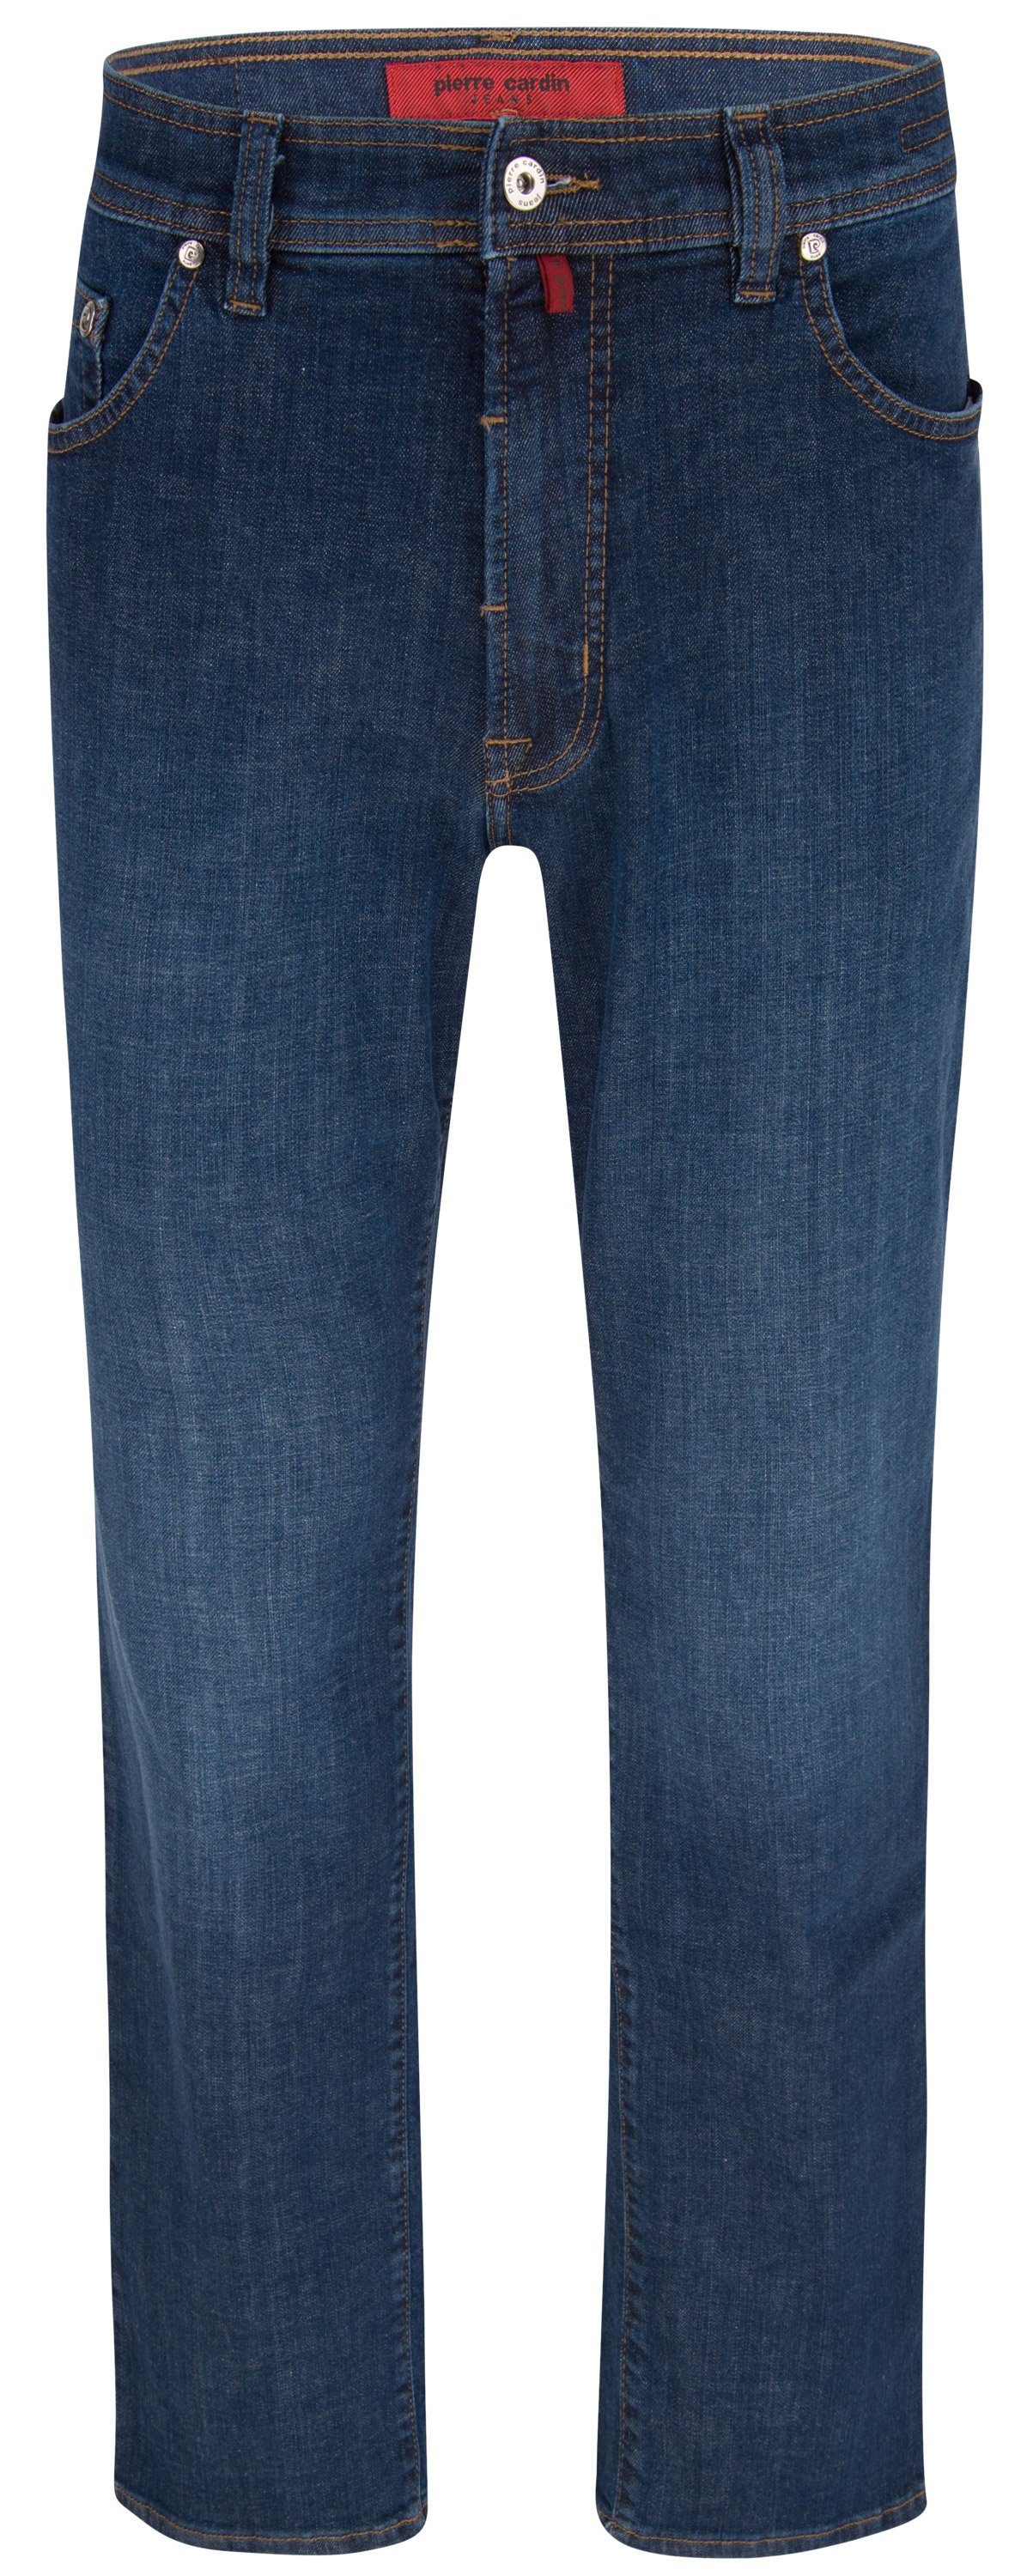 Pierre Cardin 5-Pocket-Jeans PIERRE CARDIN DIJON deep sea indigo used 3231 7200.01 - DENIM EDITION